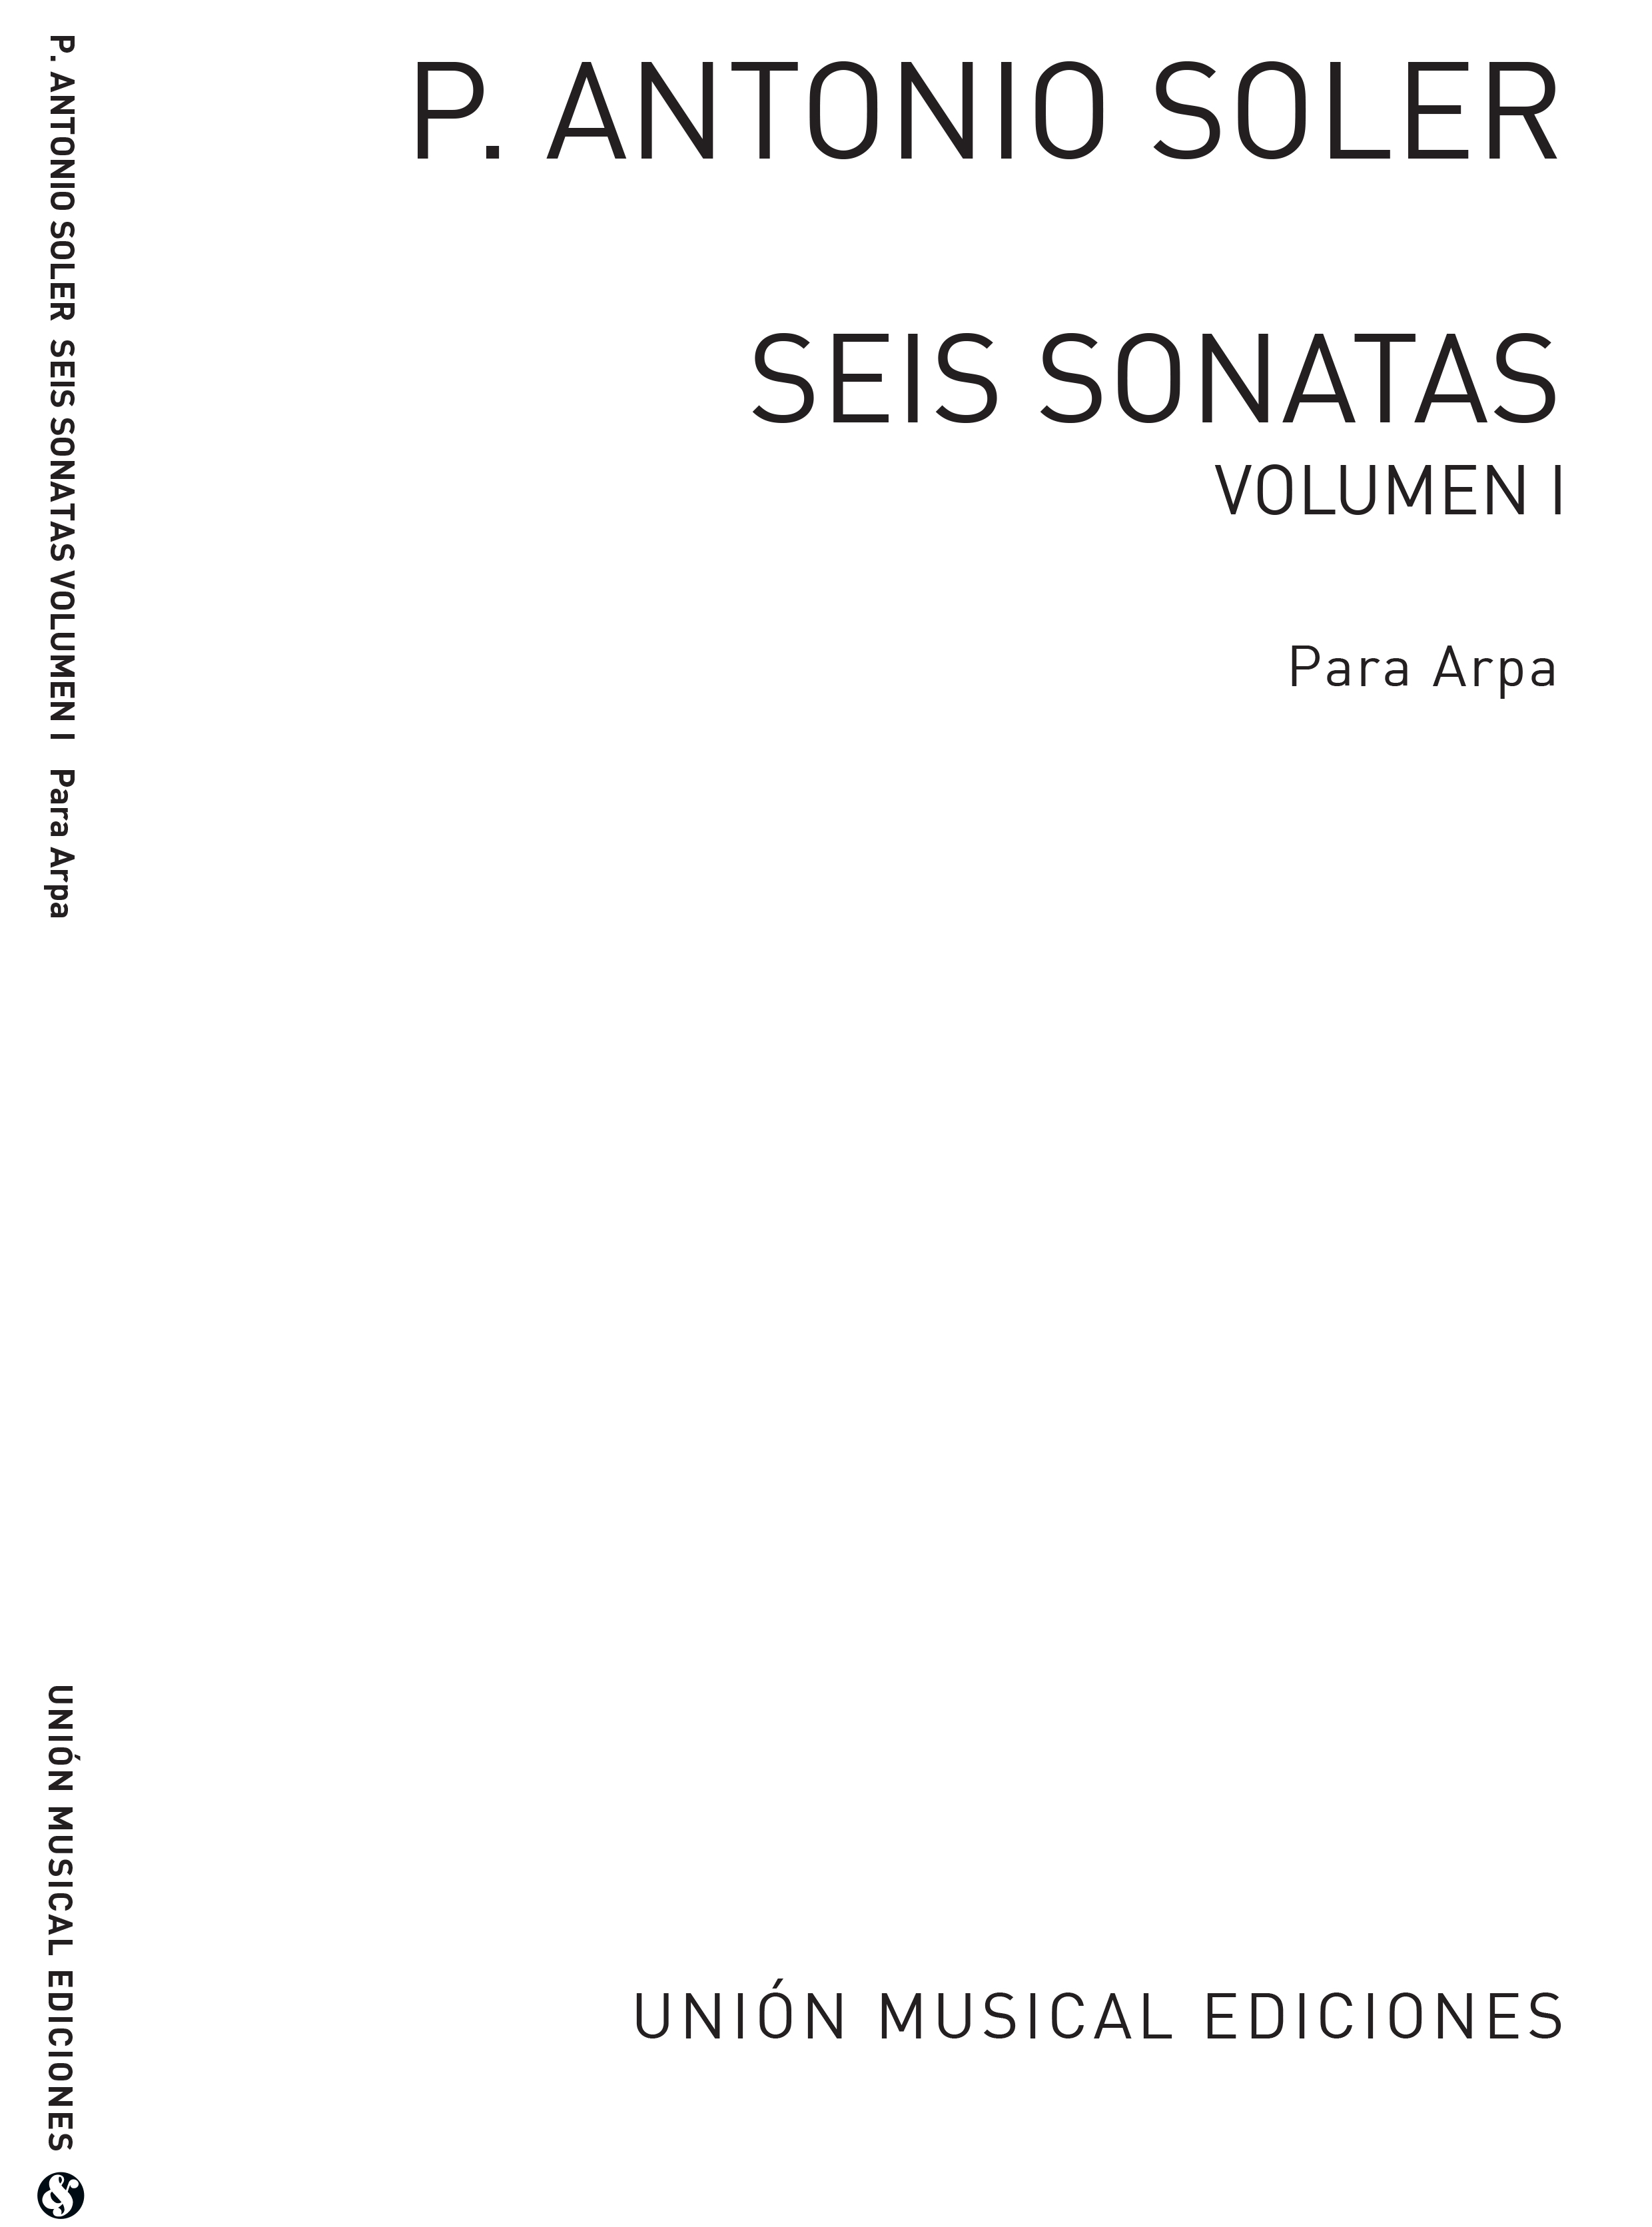 Soler: Seis Sonatas Vol.1 (Calvo Manzano) for Harp